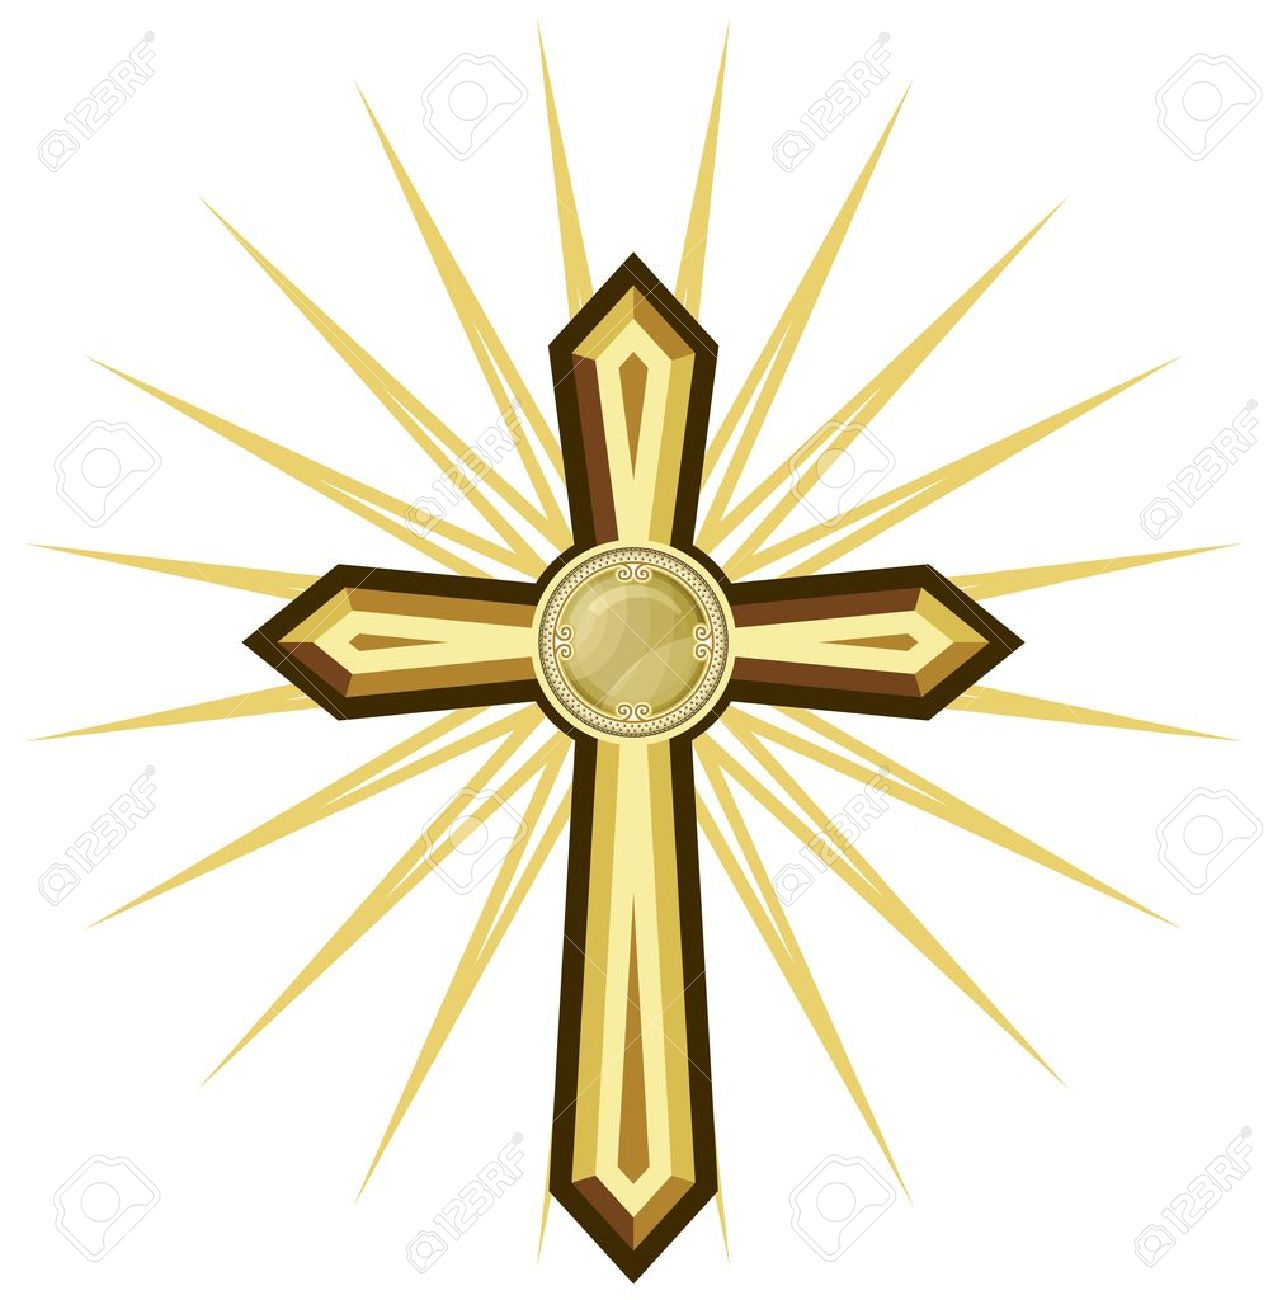 Golden Cross - What is Golden Cross & How to use it?